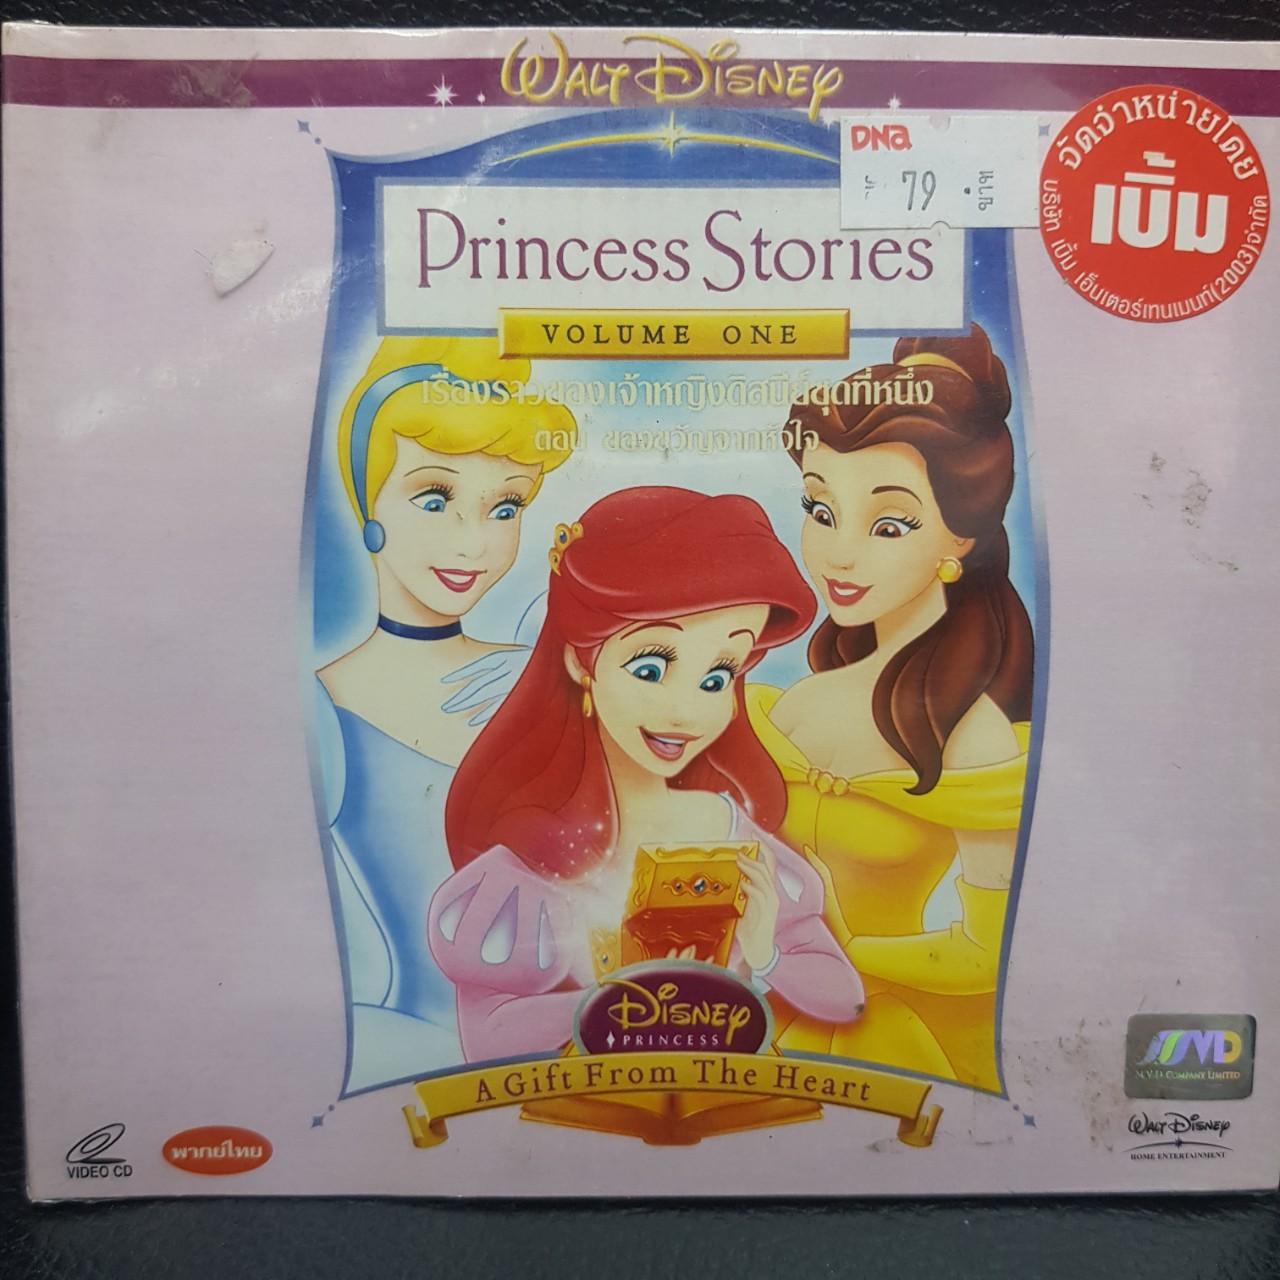 VCDหนัง เรื่องราวของเจ้าหญิงดิสนีย์1 ตอนของขวัญจากหัวใจ Princess Stories 1ฉบับ พากย์ไทย (MVDVCD179-เรื่องราวของเจ้าหญิงดิสนีย์1PrincessStories1) cartoon การ์ตูน ดิสนีย์ disney MVD หนัง ภาพยนตร์ ดูหนัง ดีวีโอซีดี วีซีดี VCD มาสเตอร์แท้ STARMART